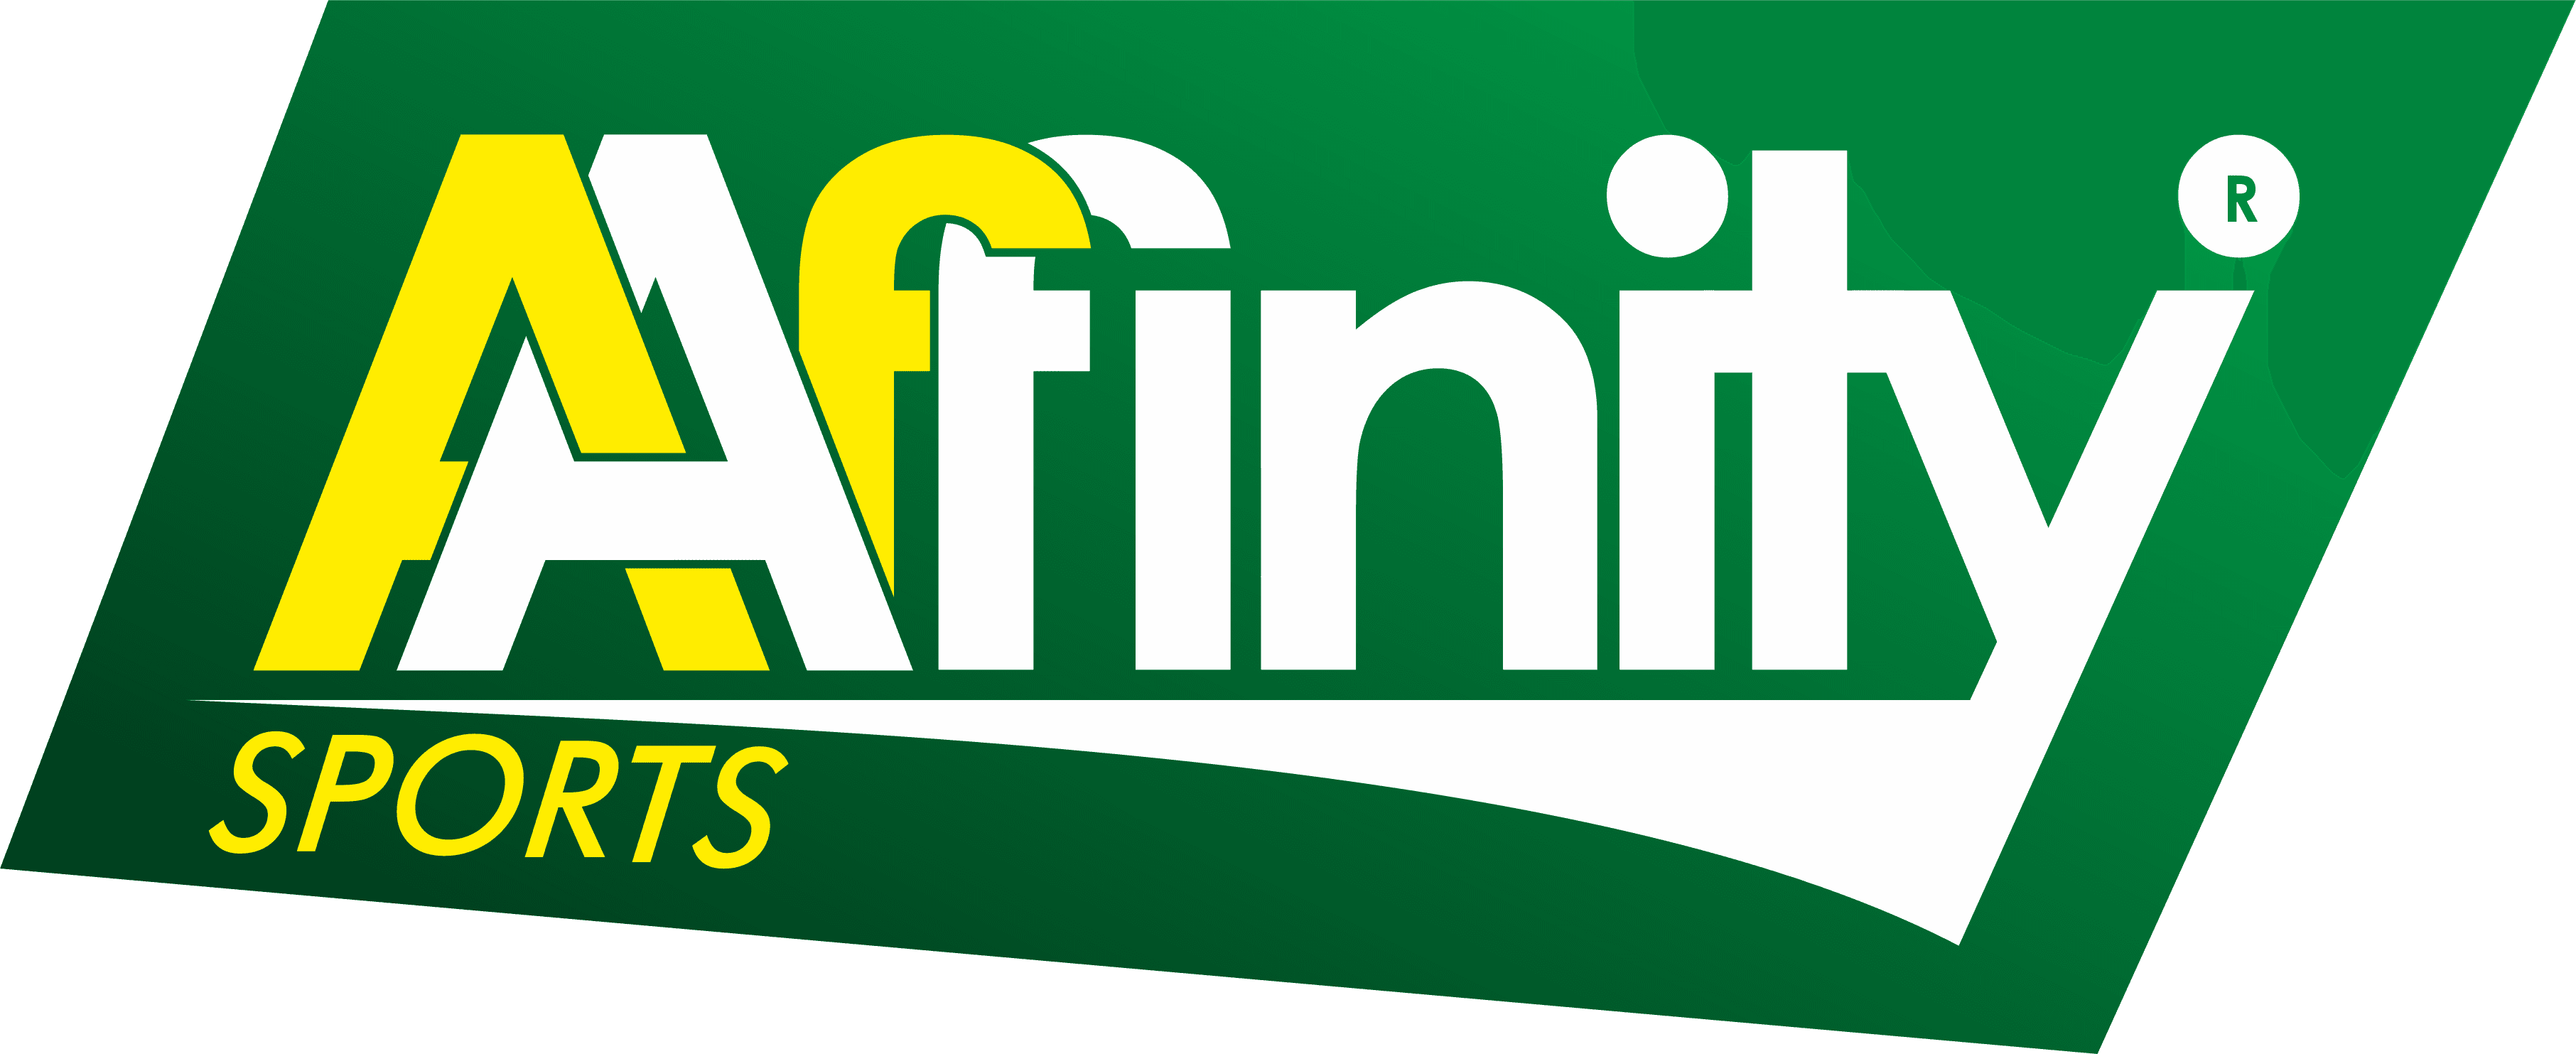 Affinity Associates